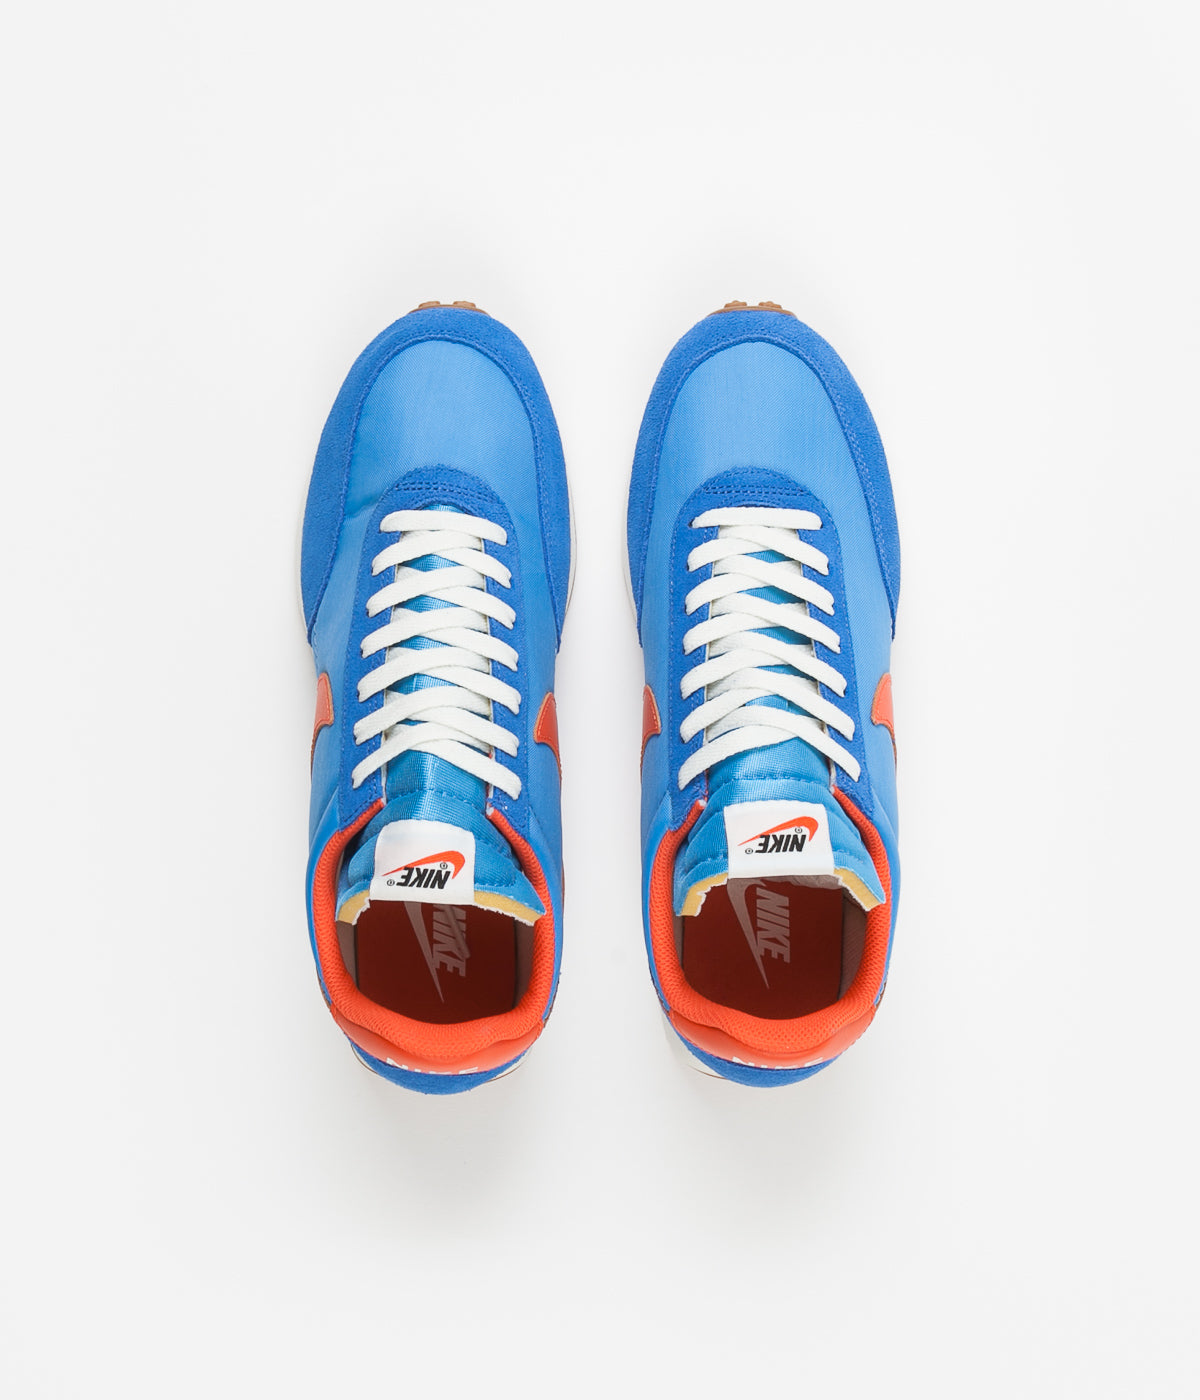 nike sneakers orange and blue